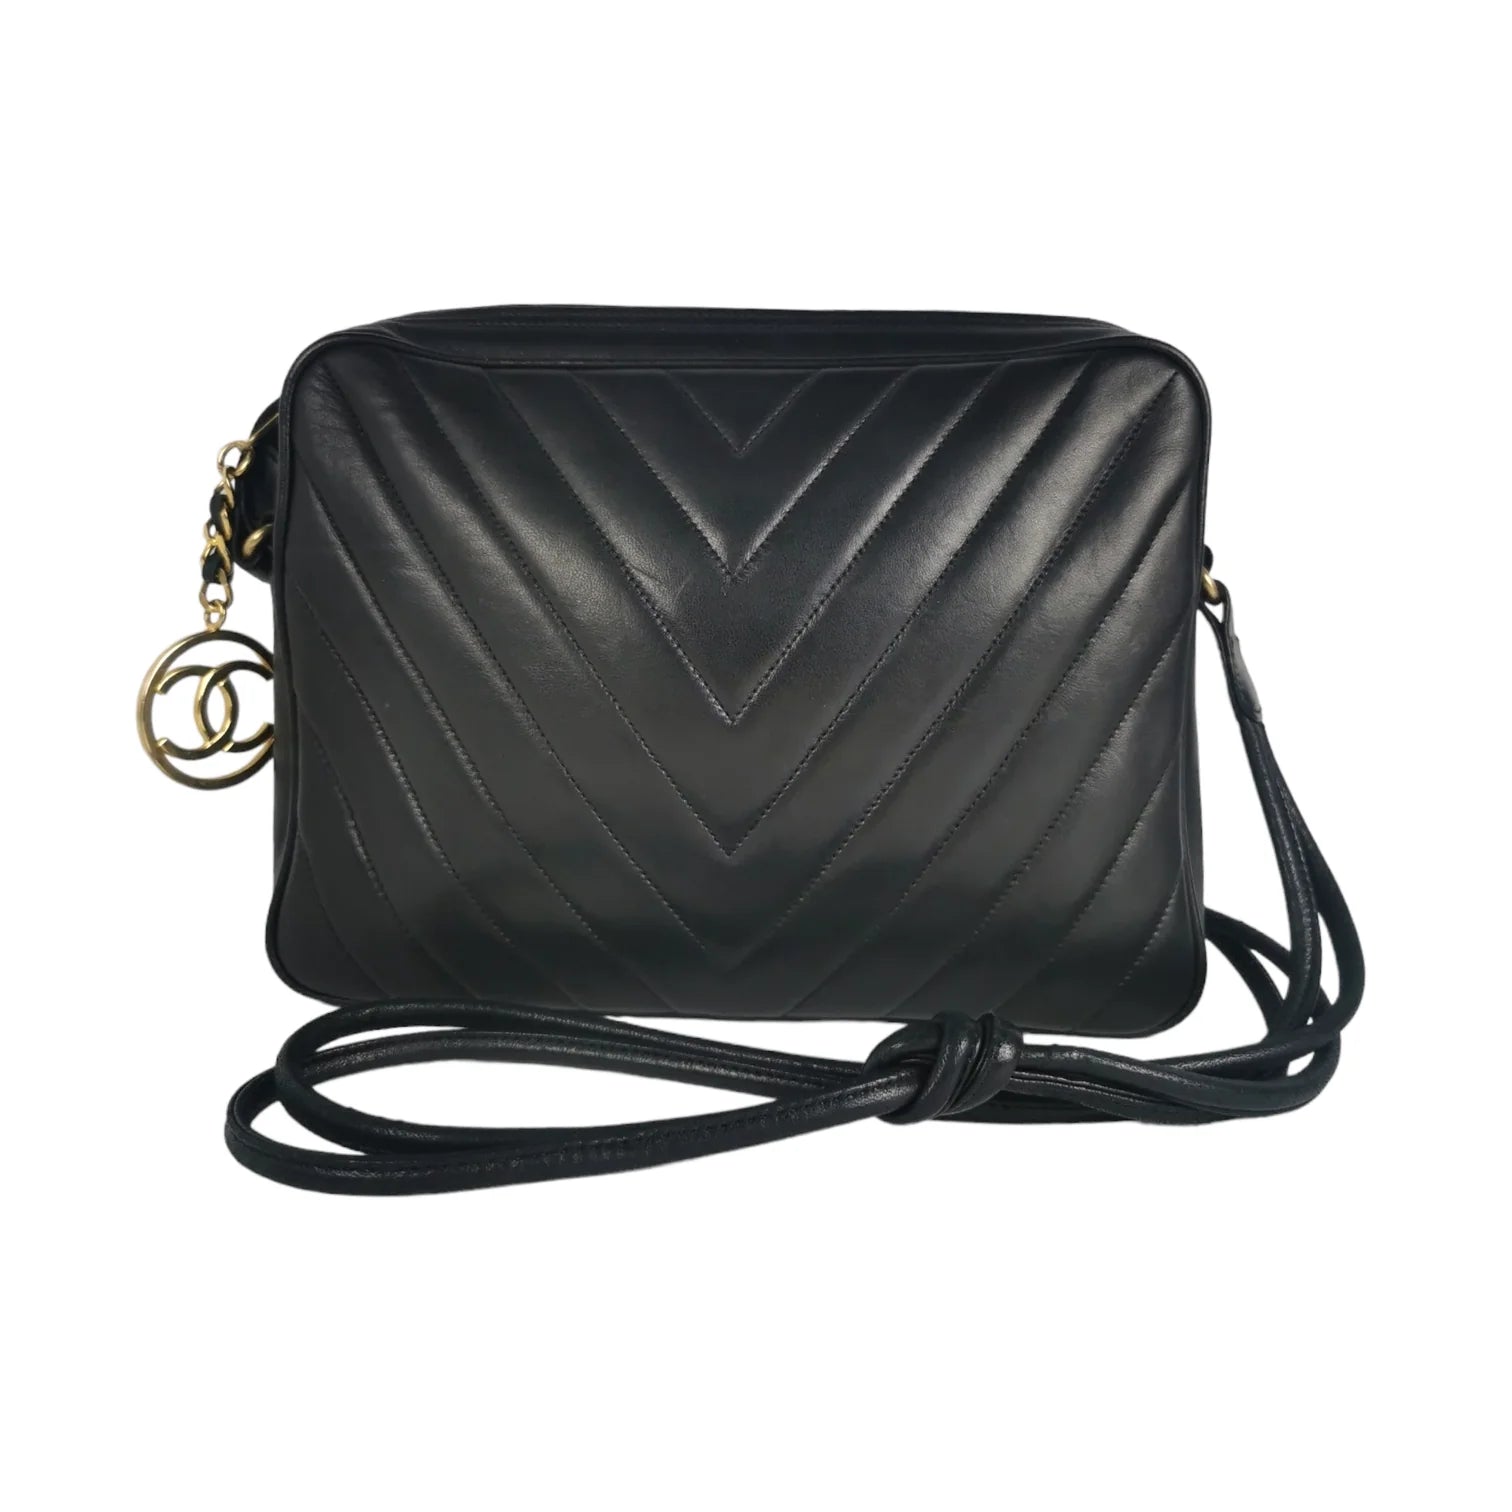 CHANEL Chanel Black Lambskin Leather Chevron Camera Bag with CC Charm - Vault 55